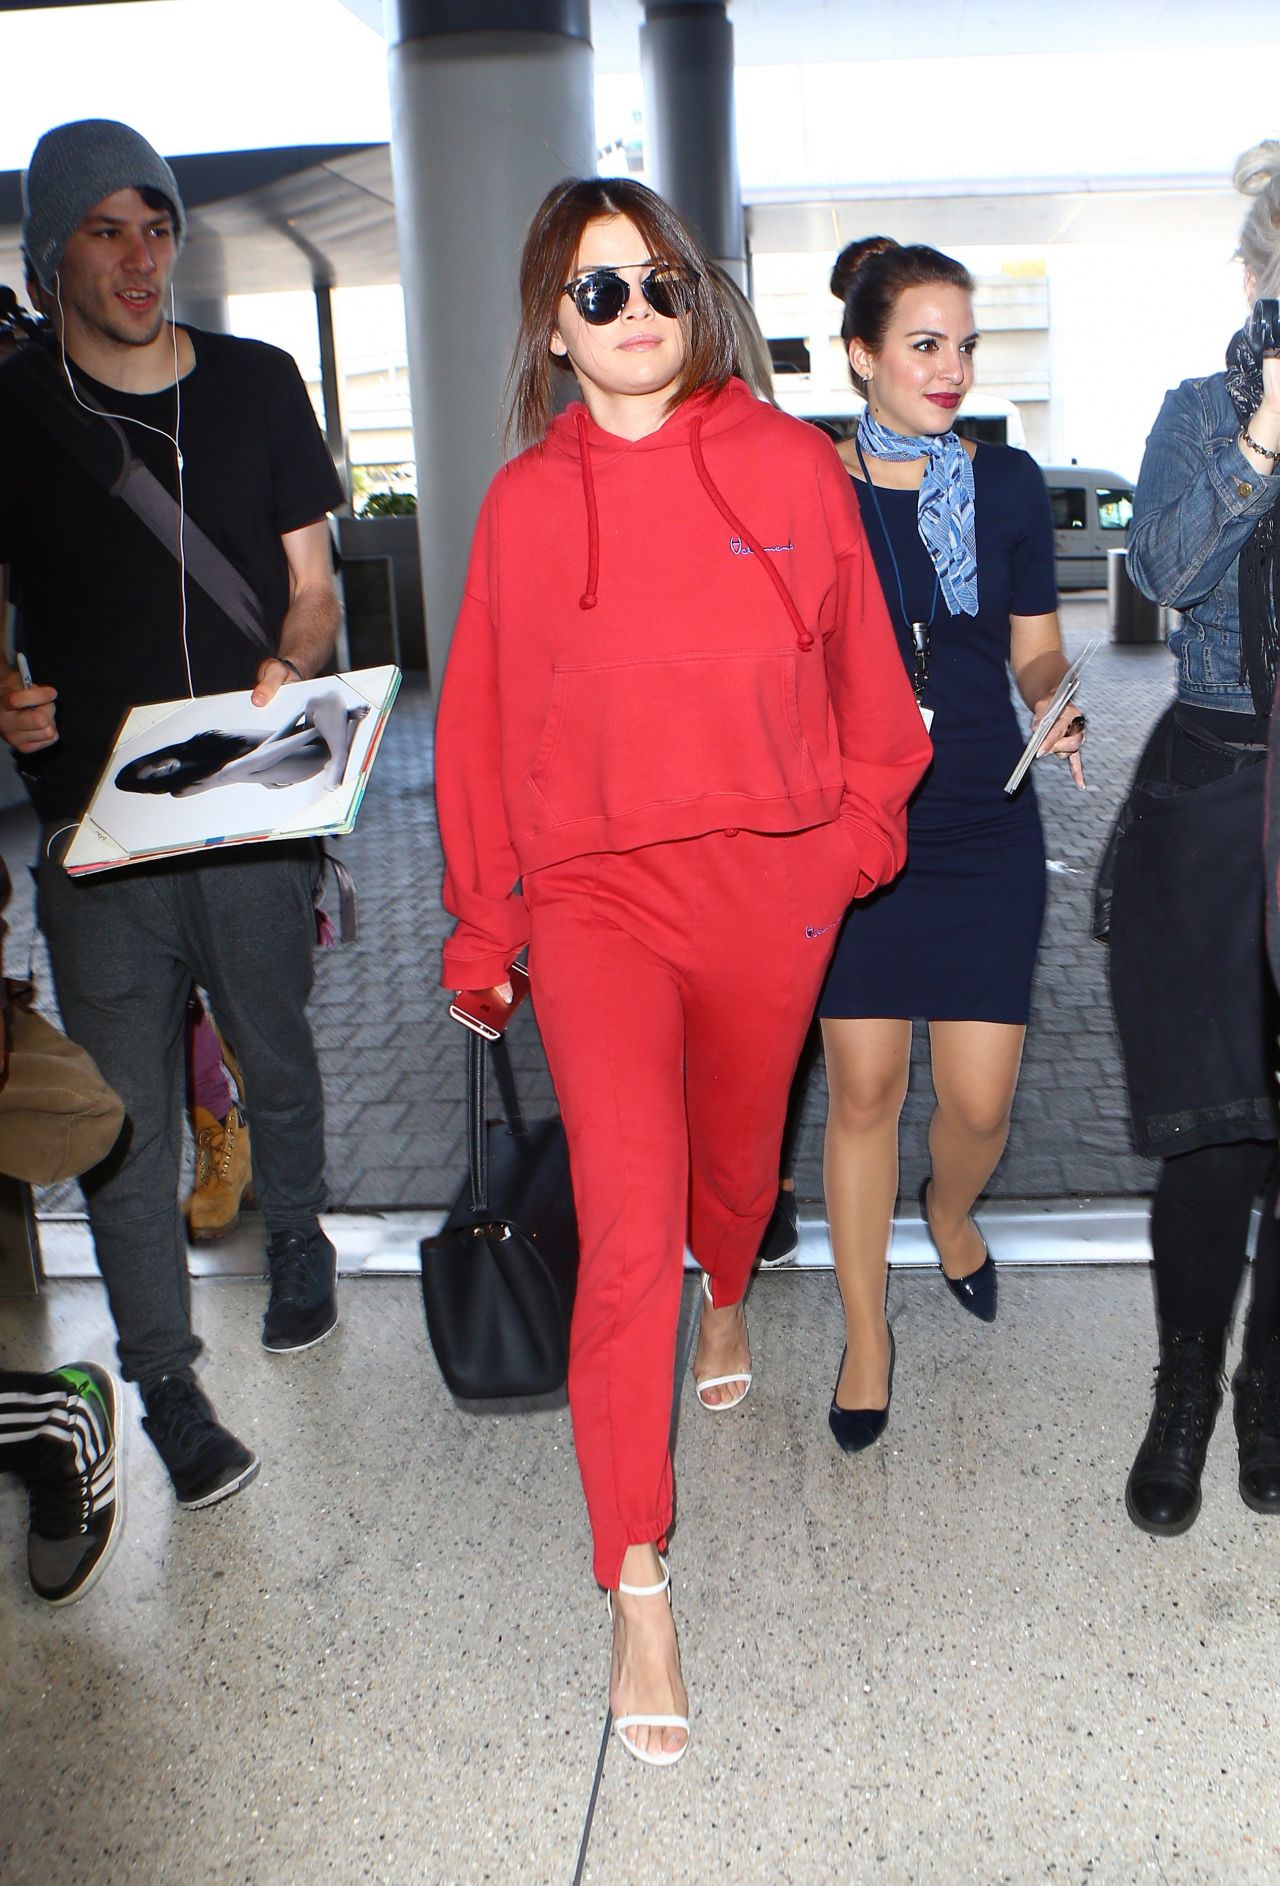 Selena Gomez LAX Airport February 16, 2016 – Star Style